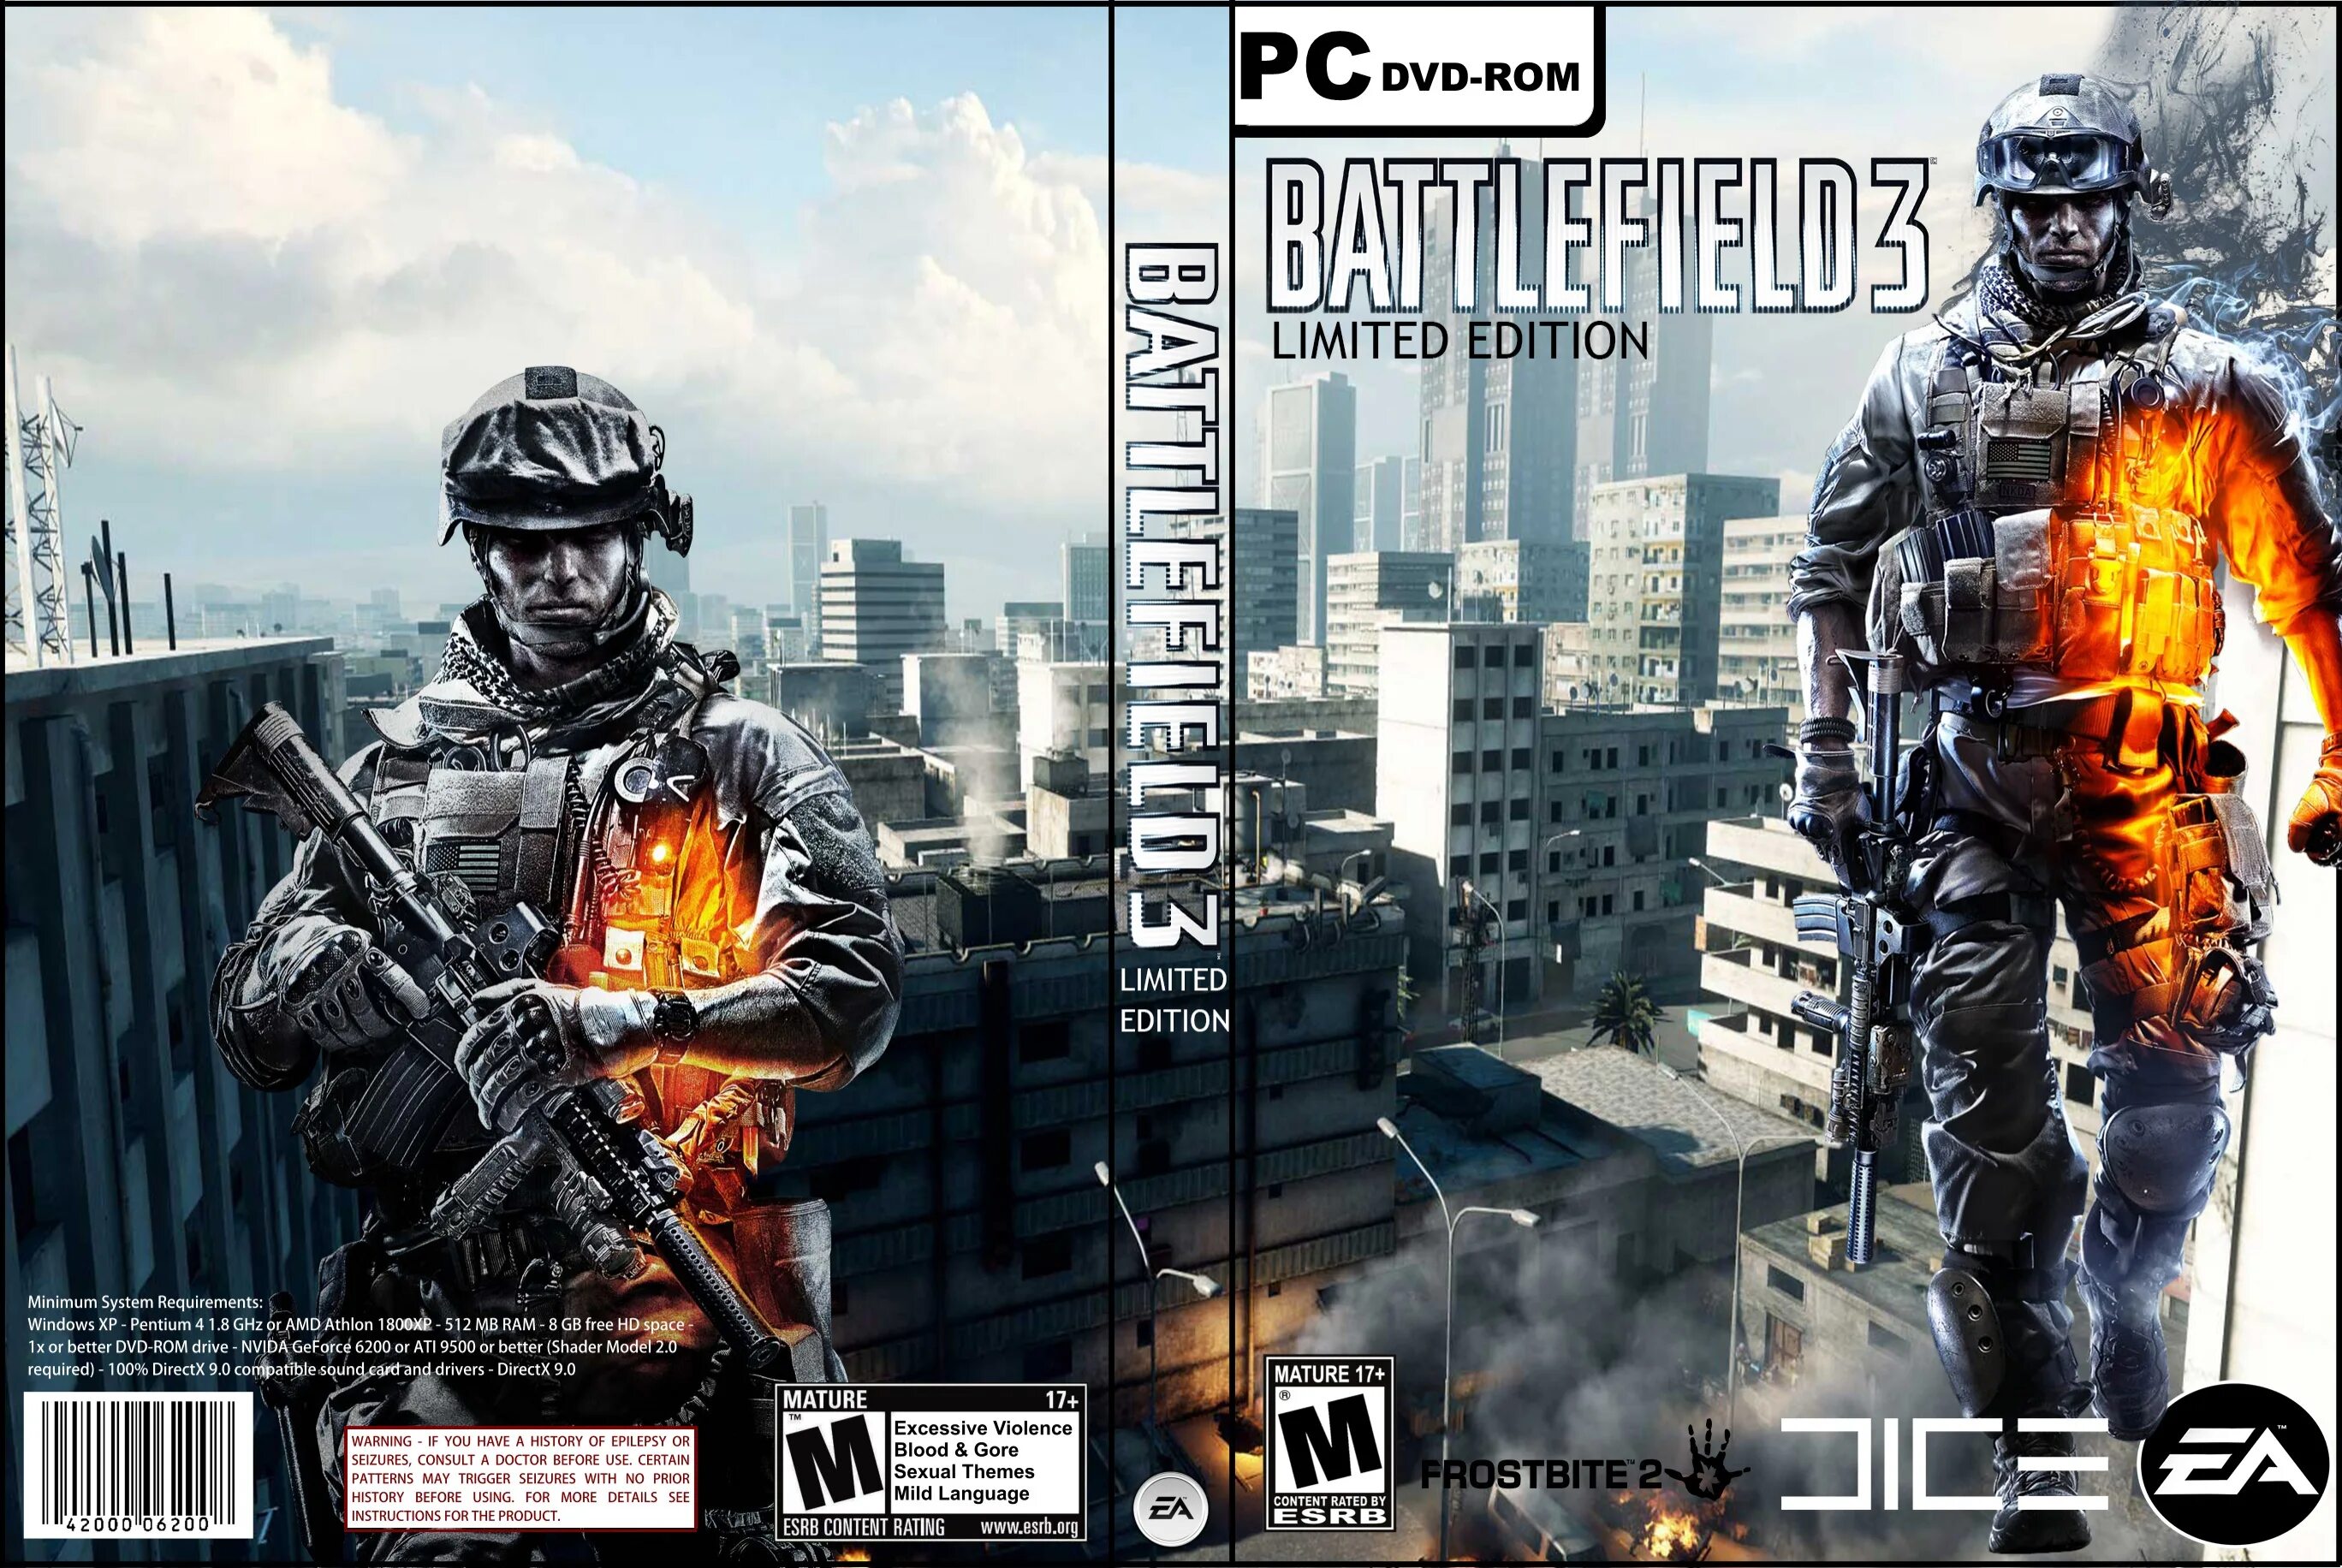 PC DVD Battlefield 3. Бателфилд 3 обложка. Battlefield 3 Limited Edition. Battlefield 2042 пс4 диск.